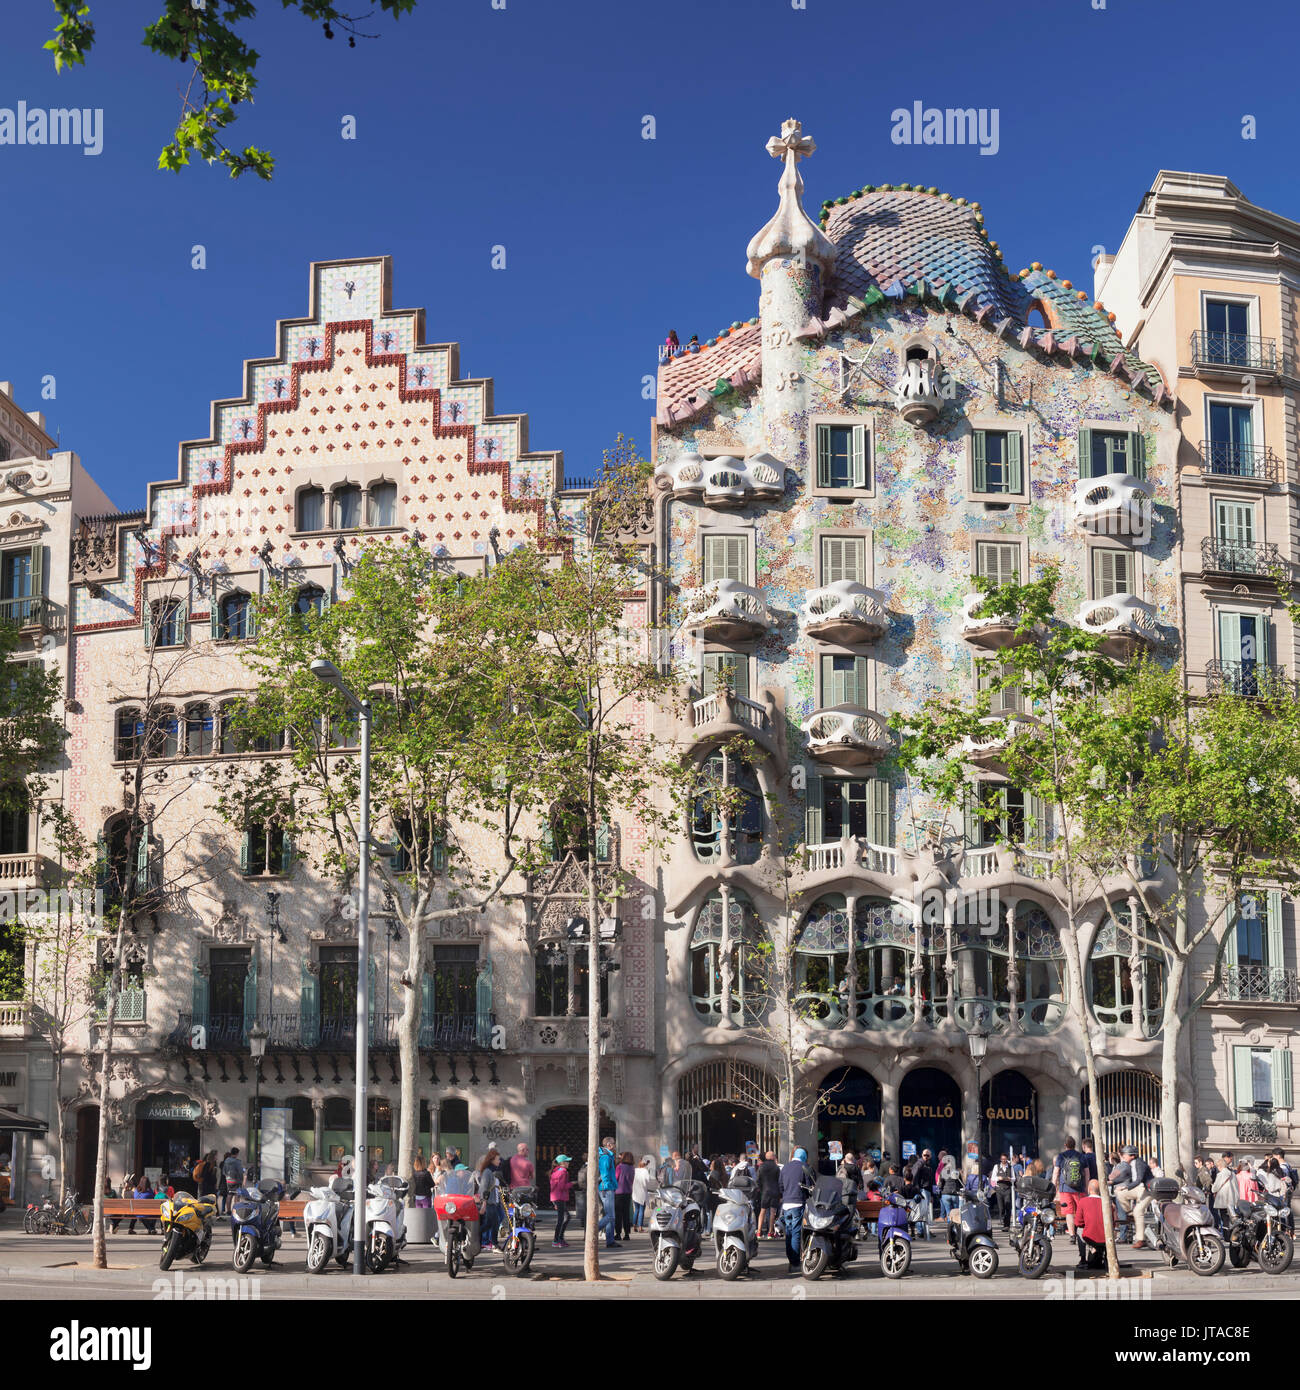 Casa Batllo, architect Antonio Gaudi, UNESCO World Heritage Site, Casa Amatller, Modernisme, Barcelona, Catalonia, Spain, Europe Stock Photo